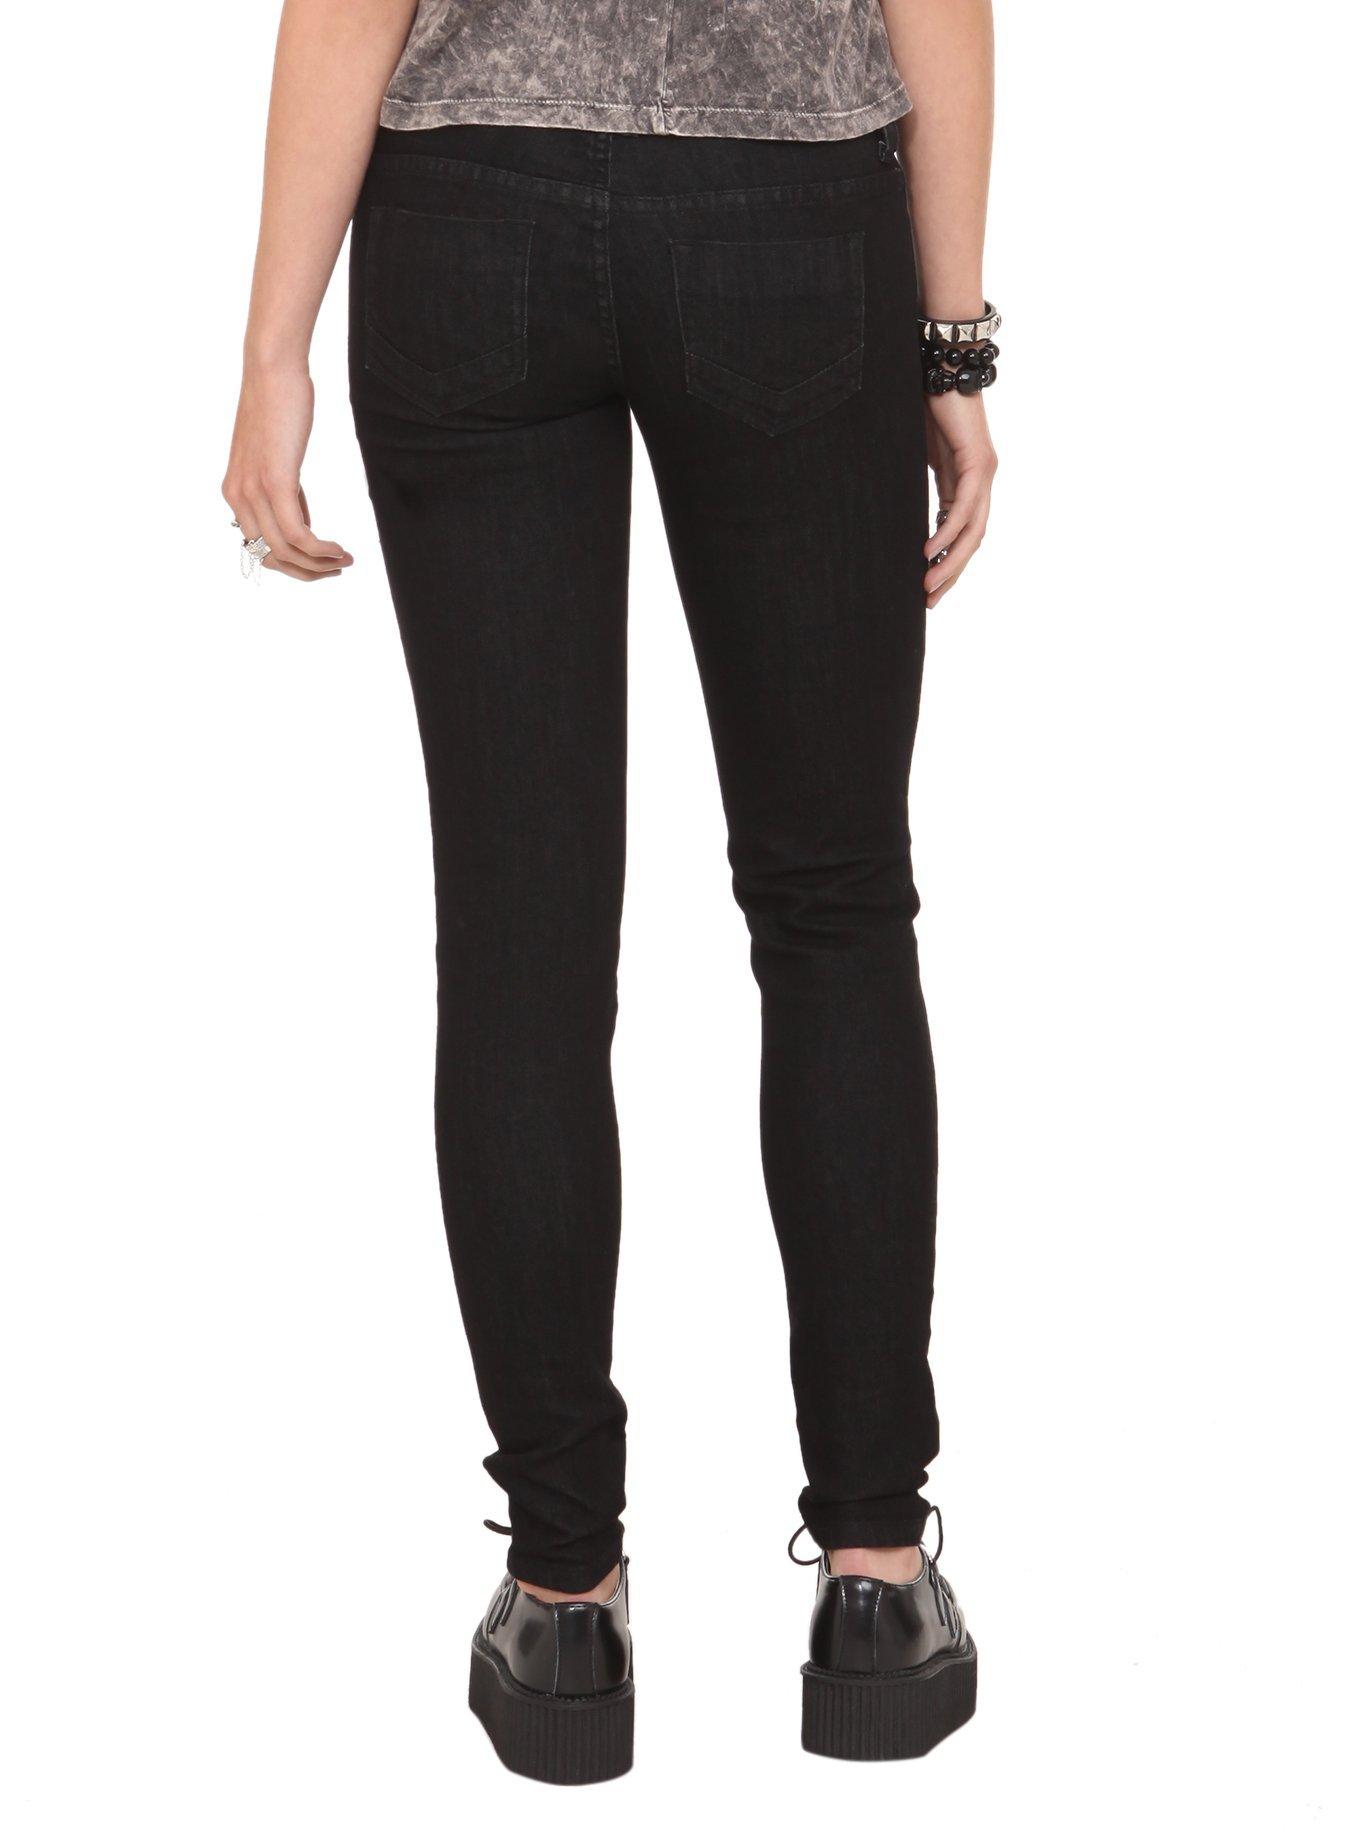 LOVEsick Black 2-Button Skinny Jeans, , alternate